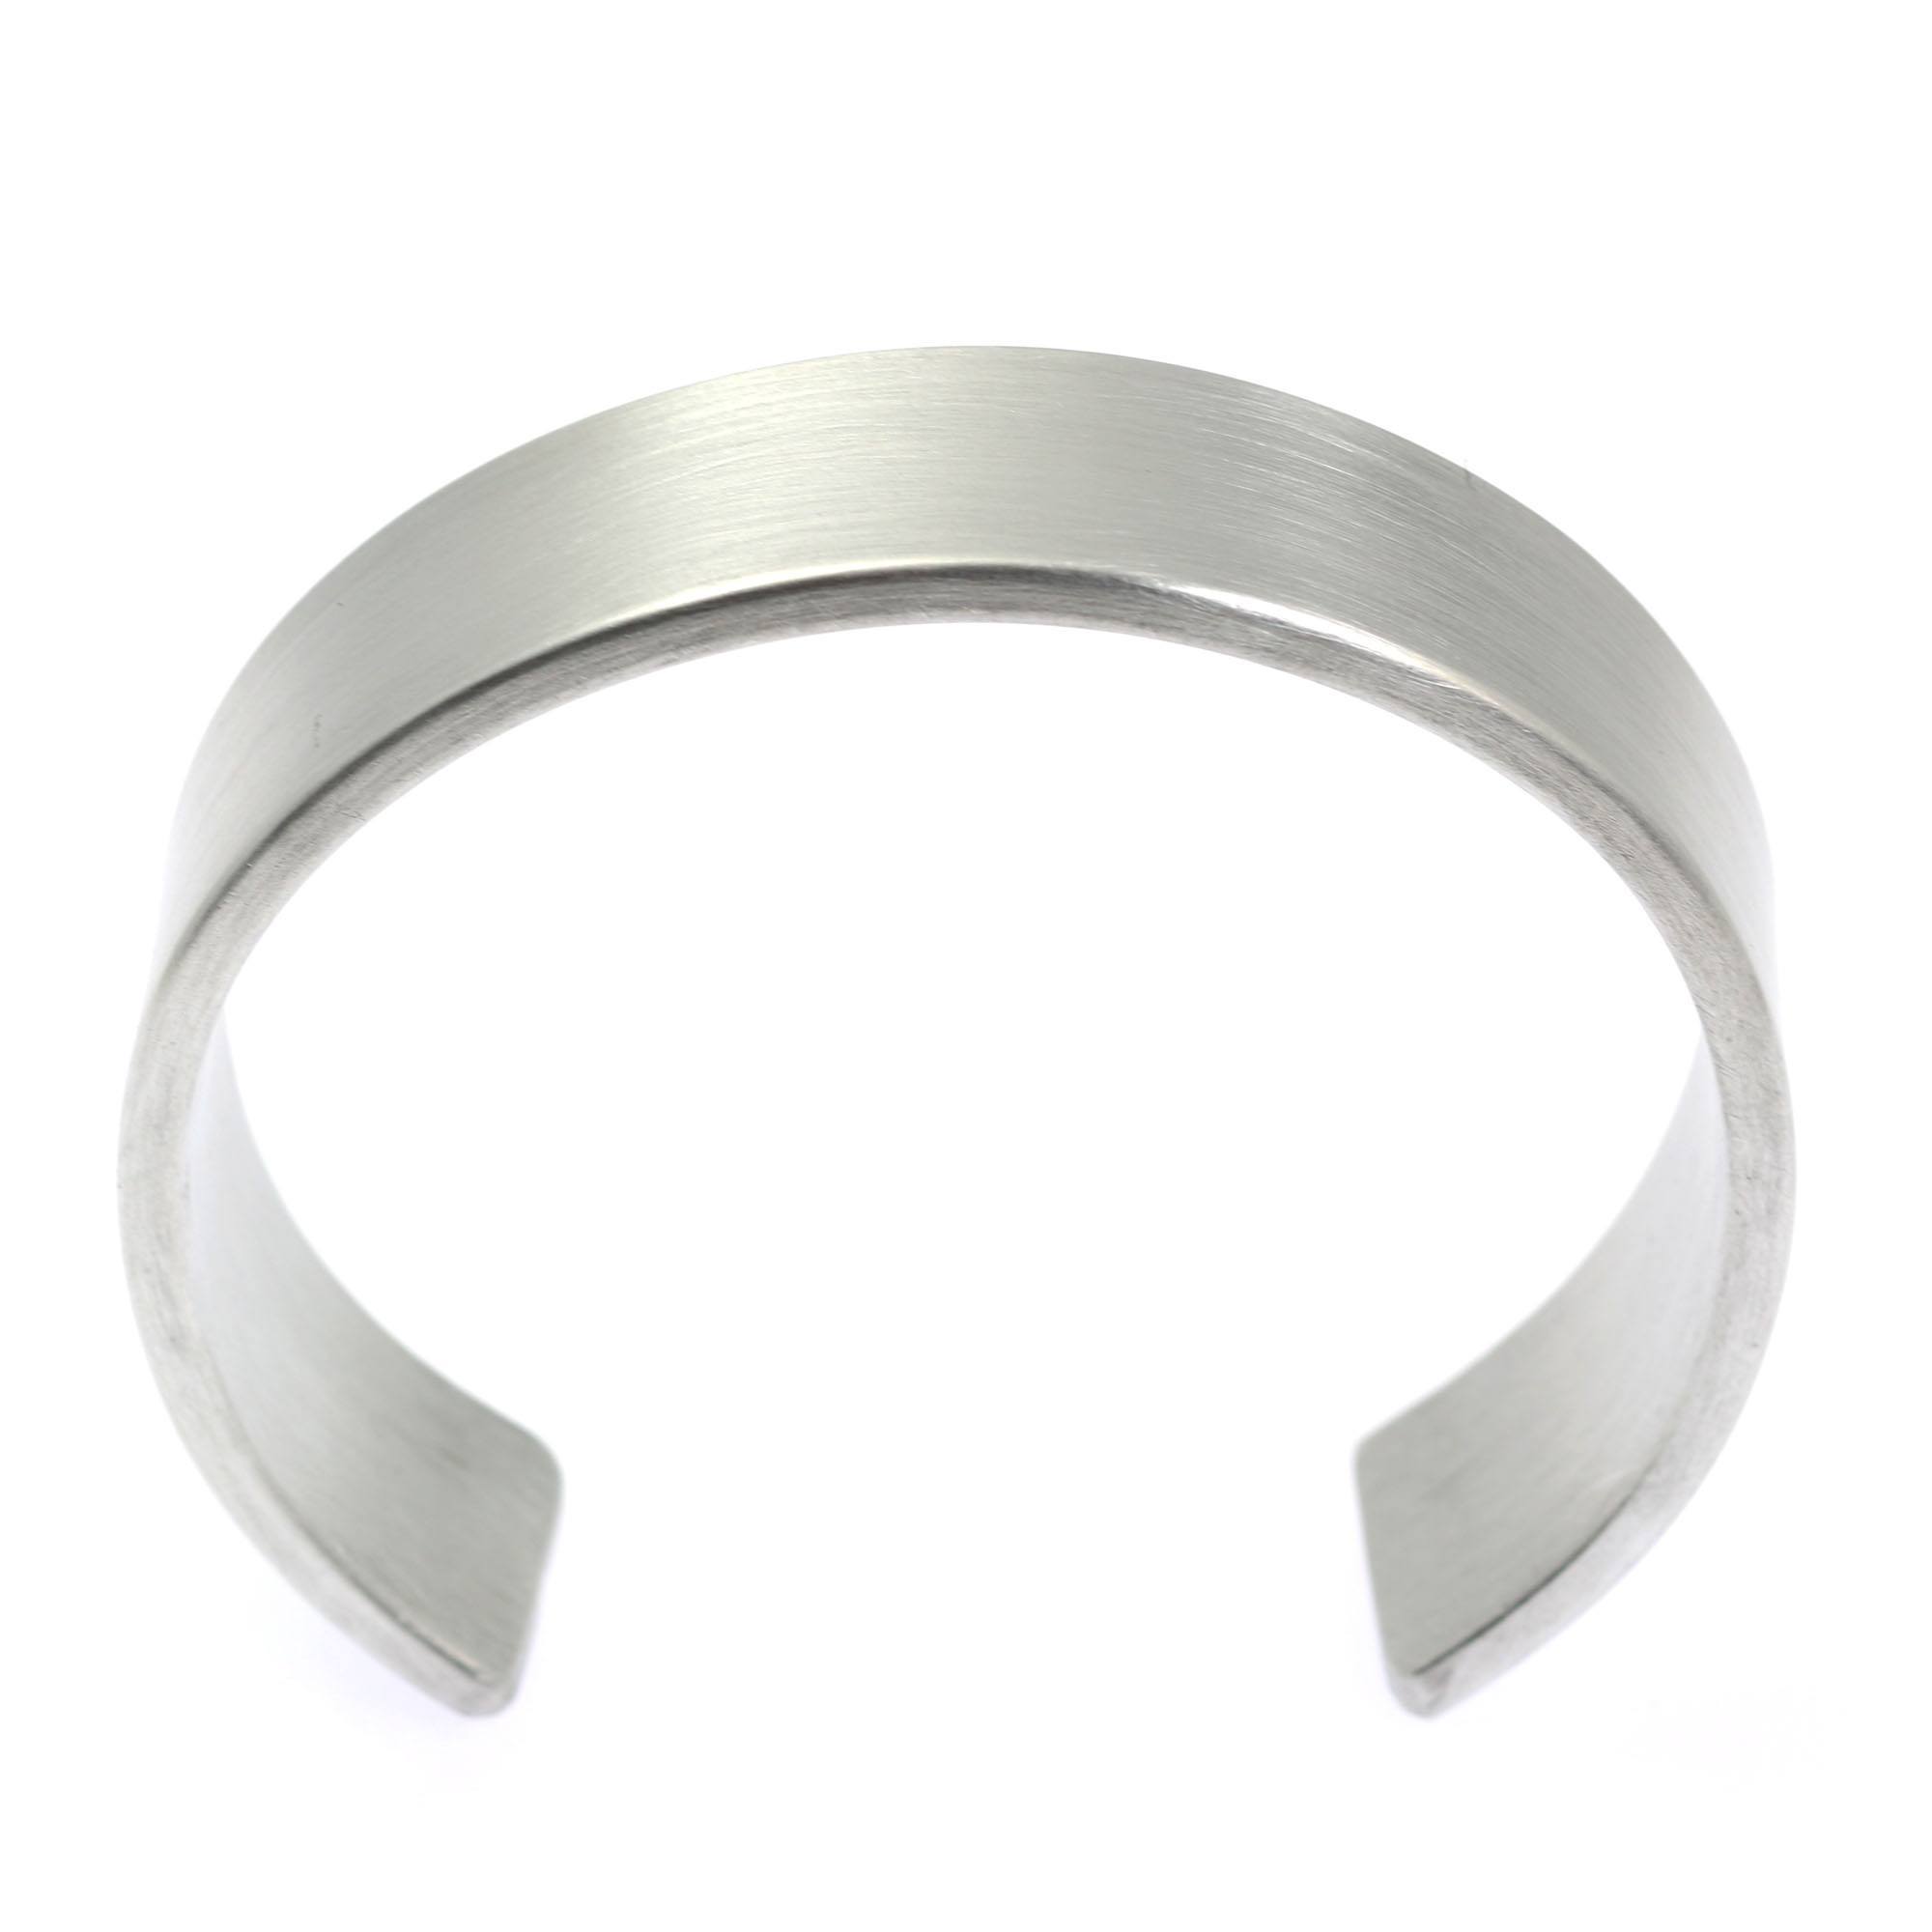 Shape of 19mm Brushed Aluminum Cuff Bracelet 